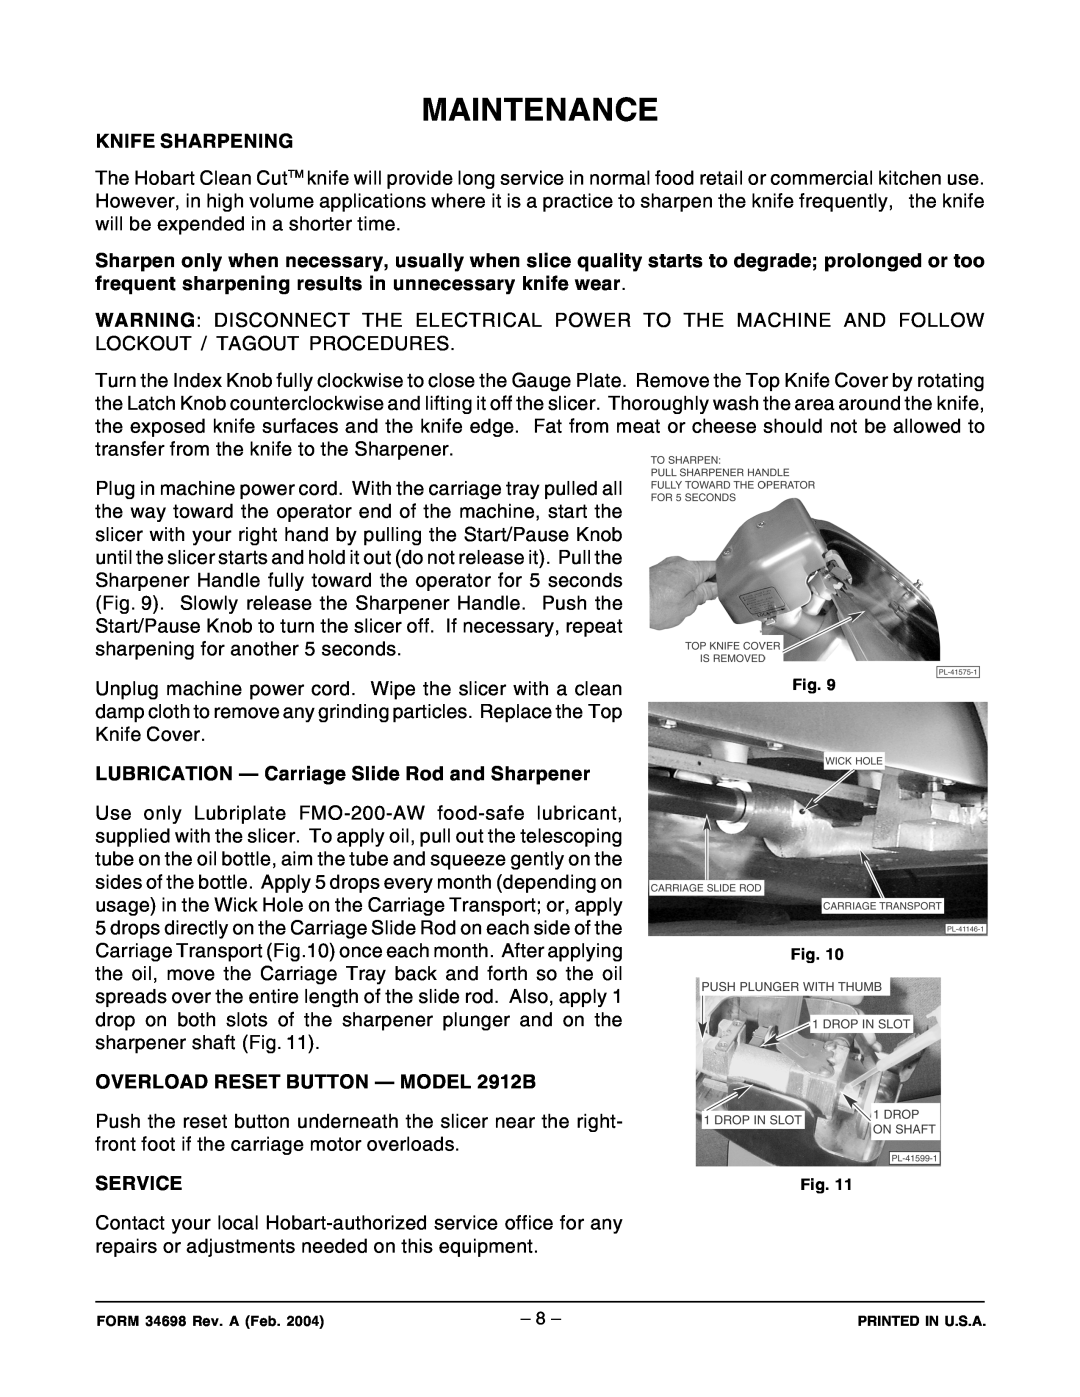 Hobart ML-134252 manual Maintenance, Knife Sharpening, LUBRICATION - Carriage Slide Rod and Sharpener, Service 